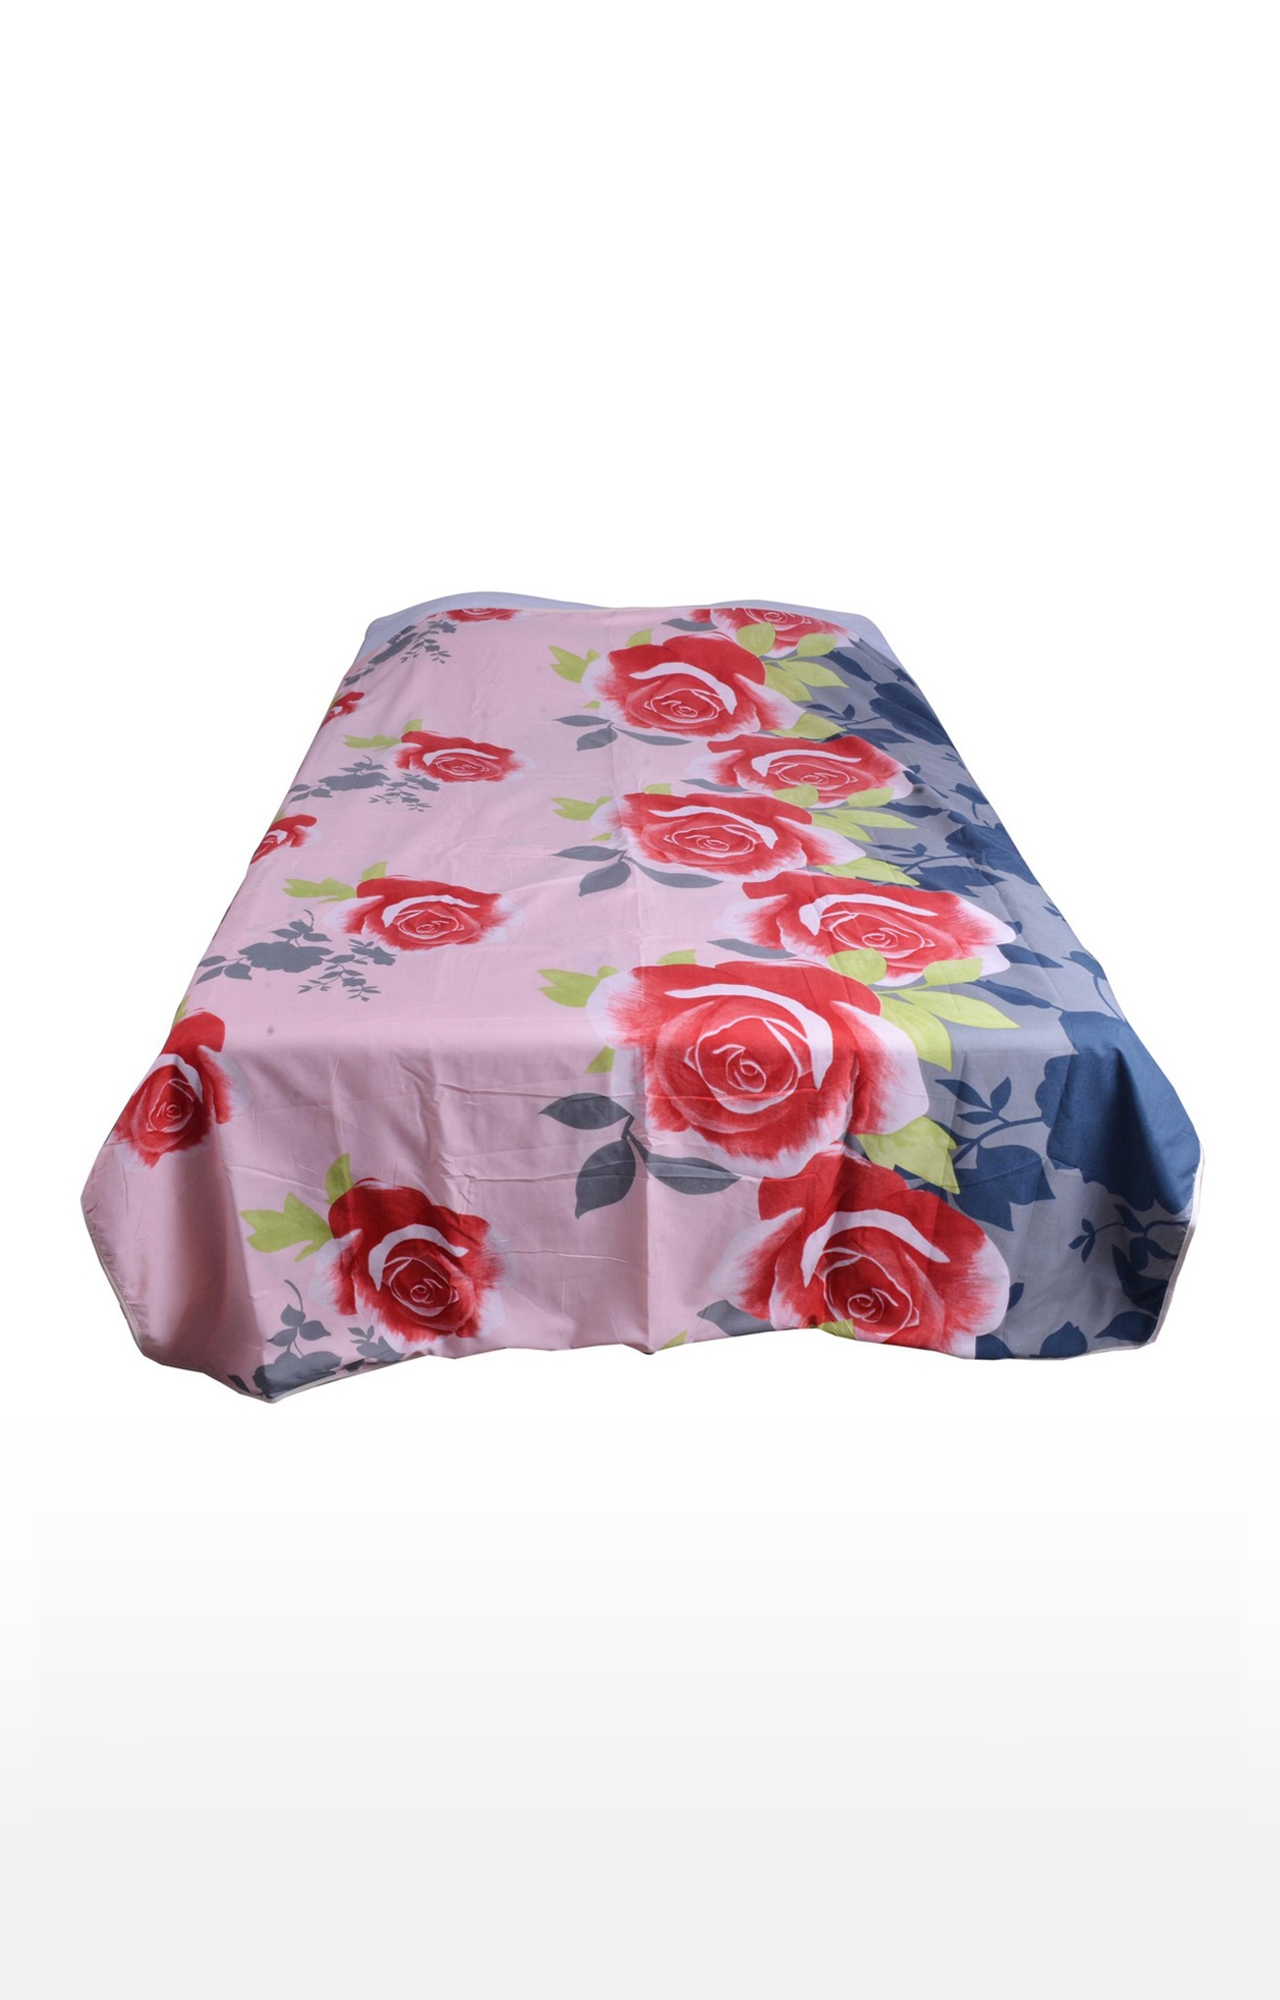 Rose Flower Printed Cotton 3 Layer Single Bed Quilt Dohar